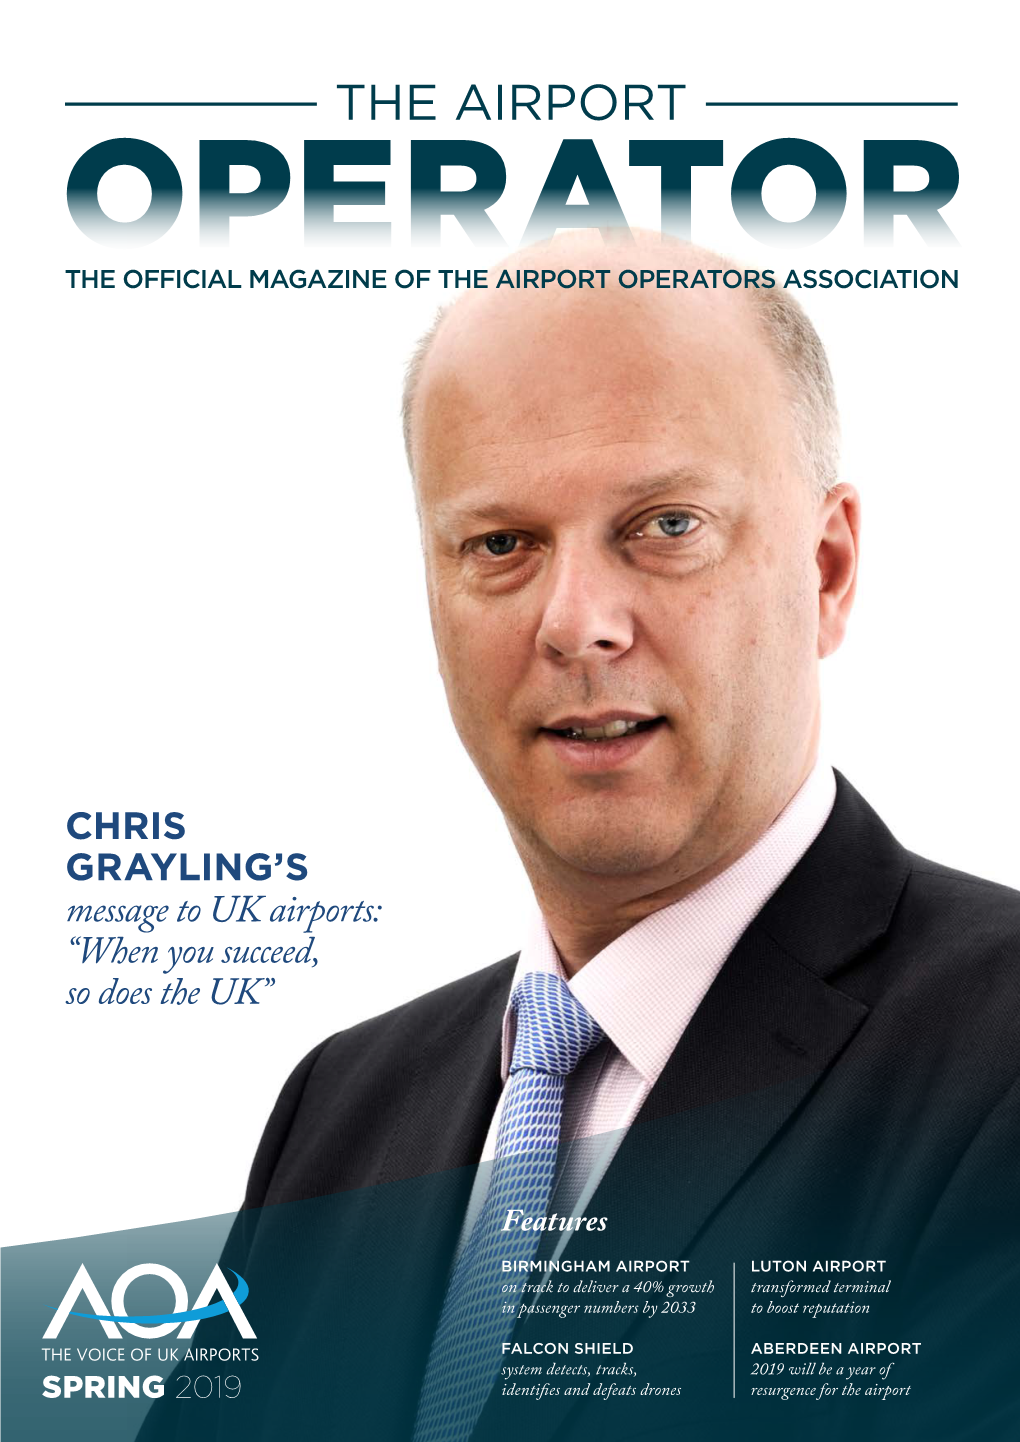 The Airport Operators Association